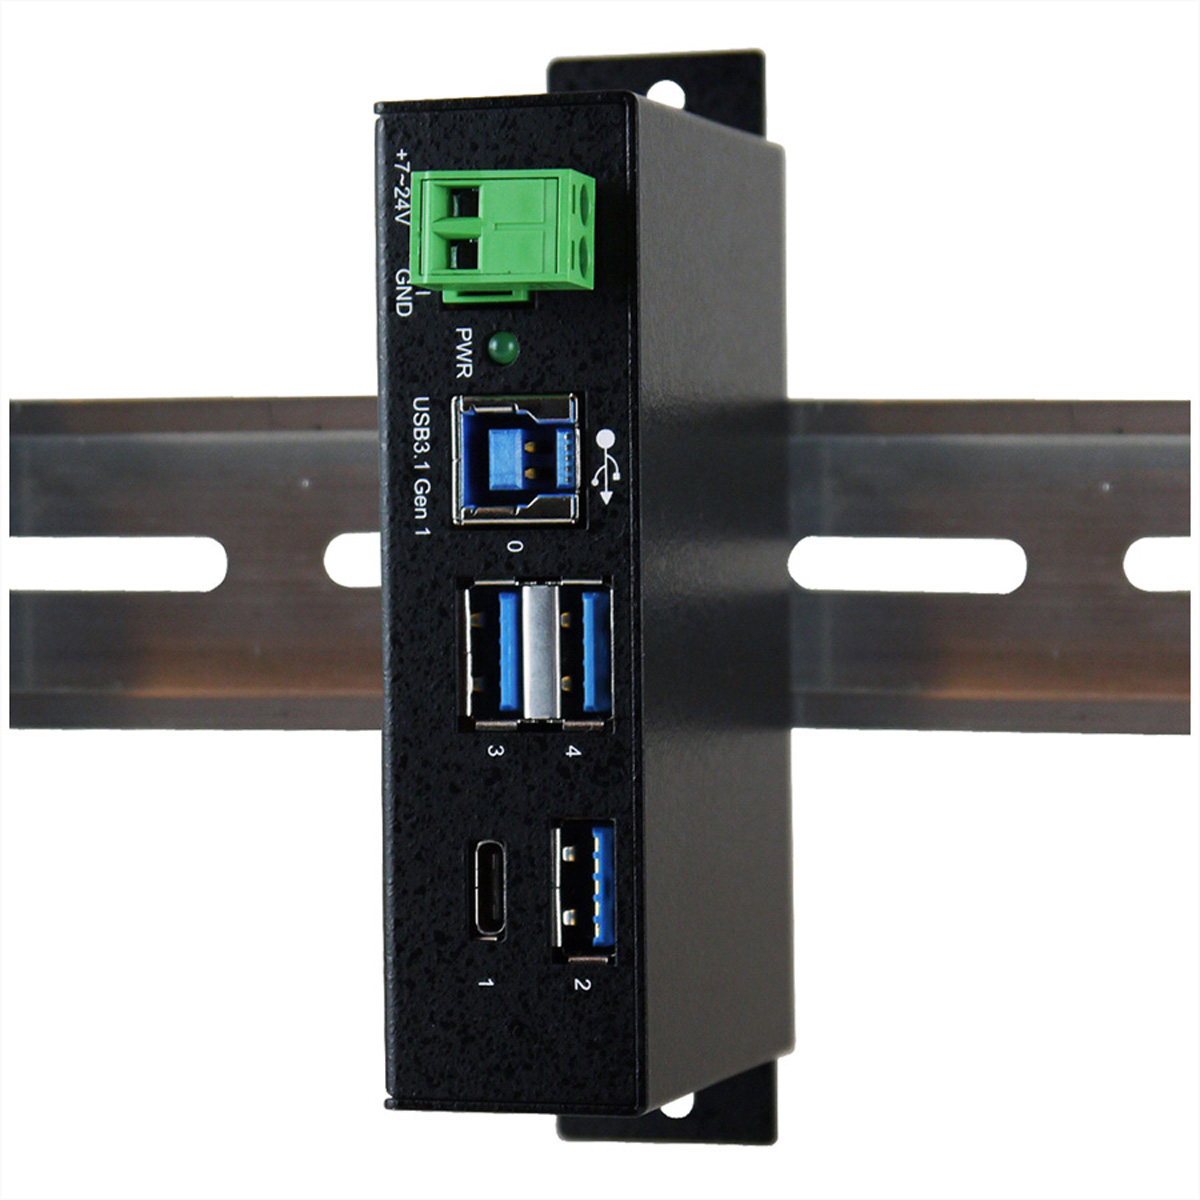 EXSYS EX-1194HMS 4 Port USB 3.2 Gen1 HUB C-Buchse, 15KV ESD Surge Protection